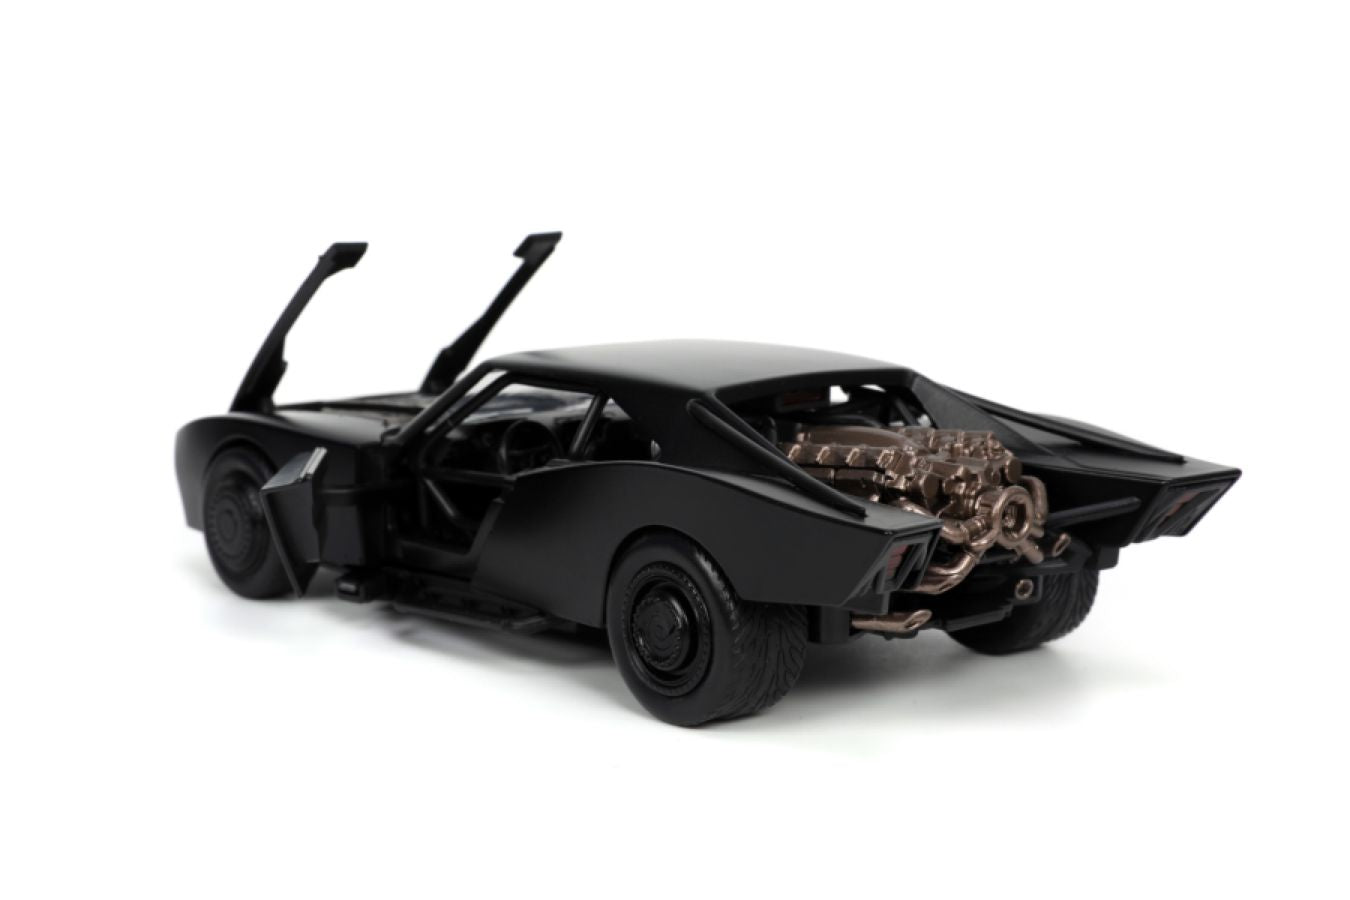 The Batman - Batmobile with Batman 1:24 Scale Hollywood Ride